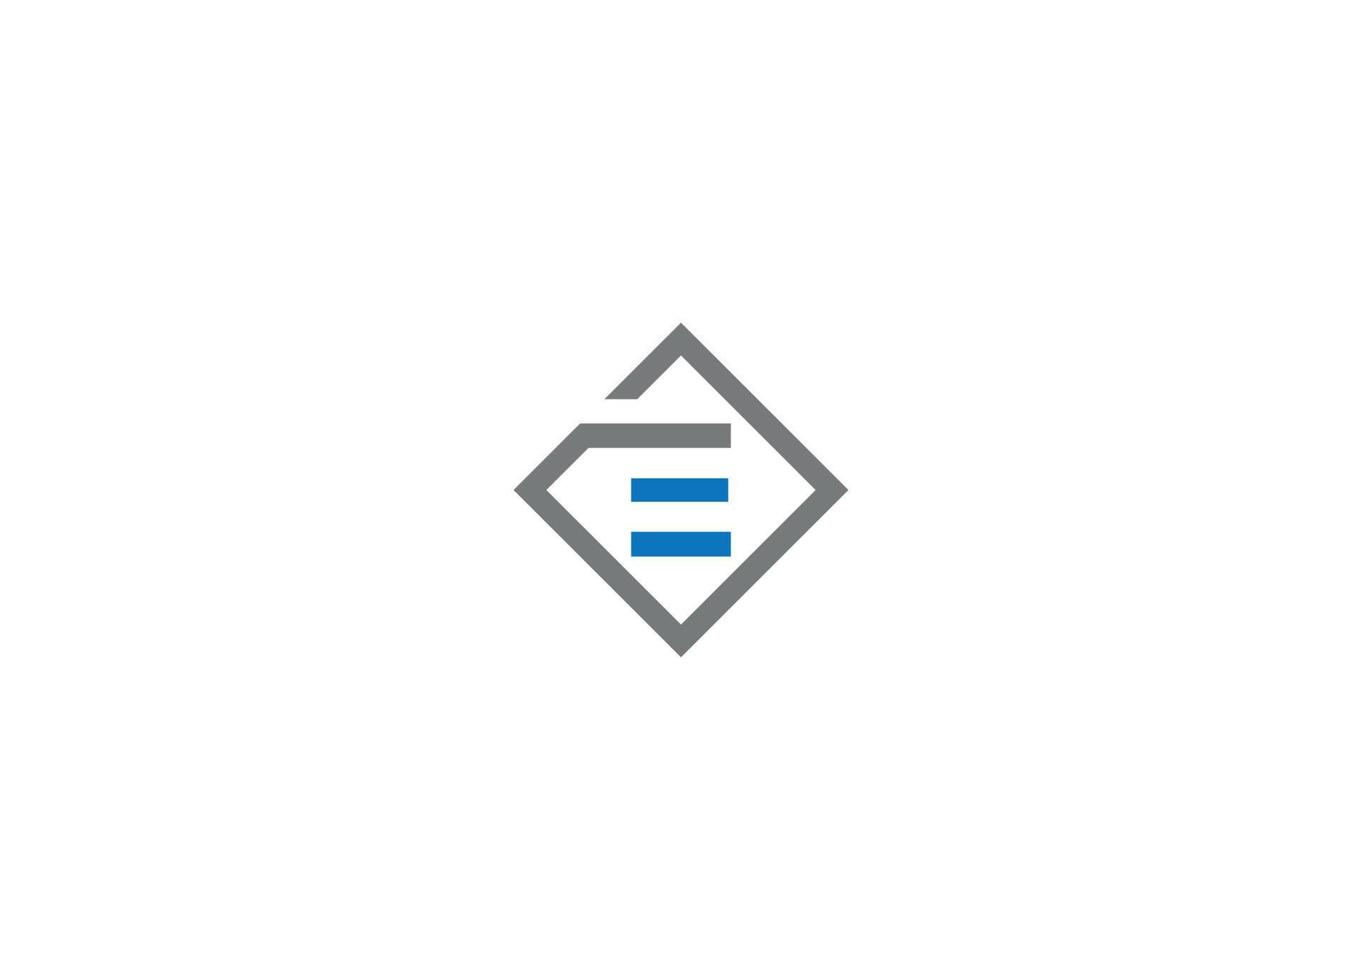 e modern logo design vector icon template with white background